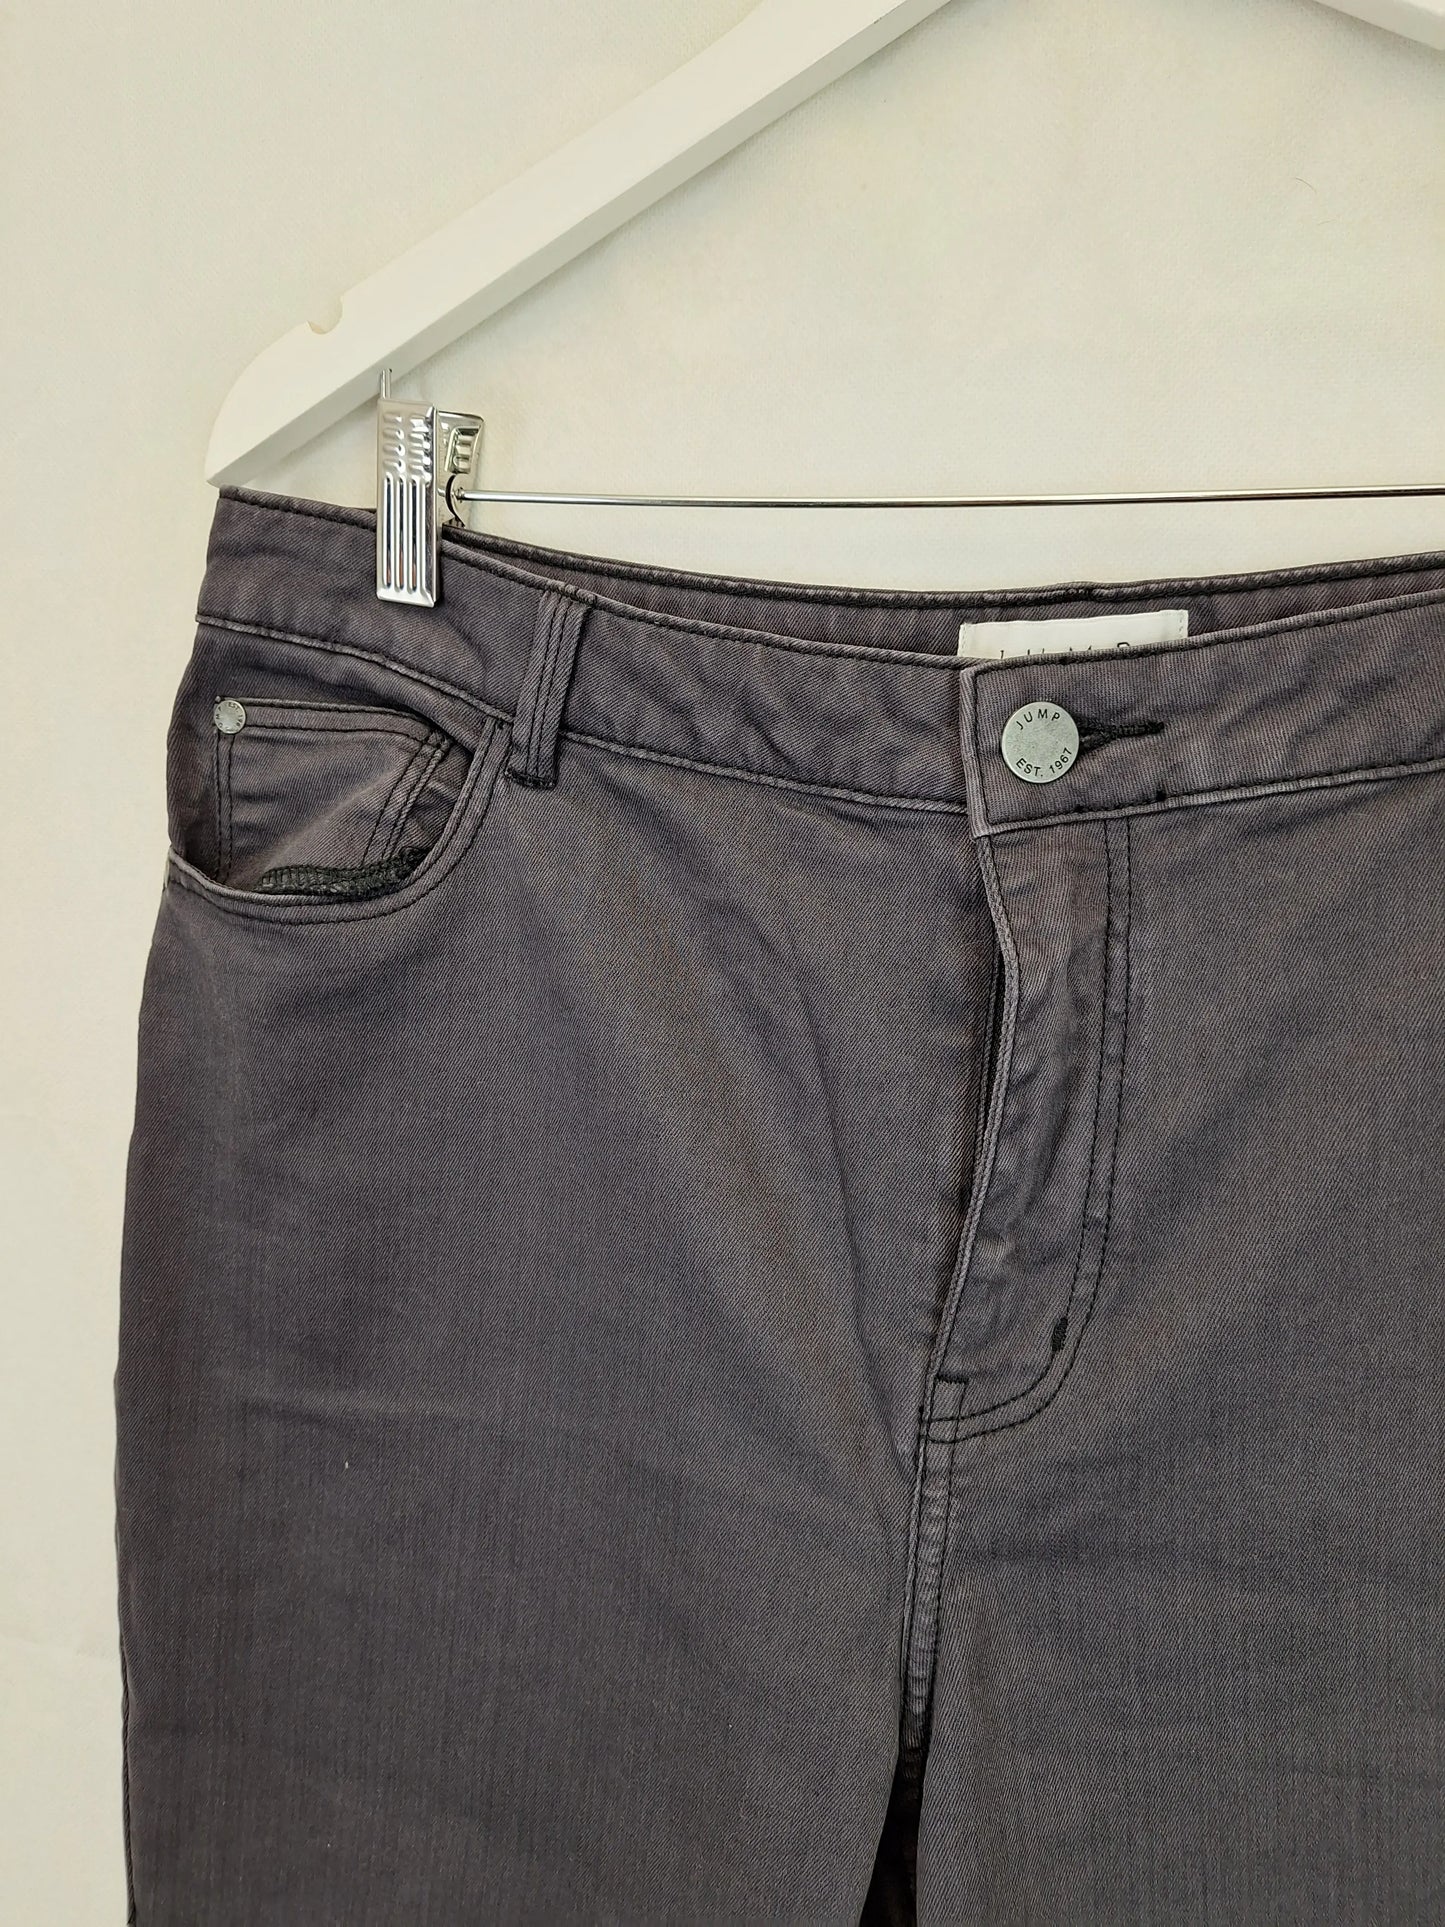 Jump Chalk Denim Jeans Size 16 by SwapUp-Online Second Hand Store-Online Thrift Store